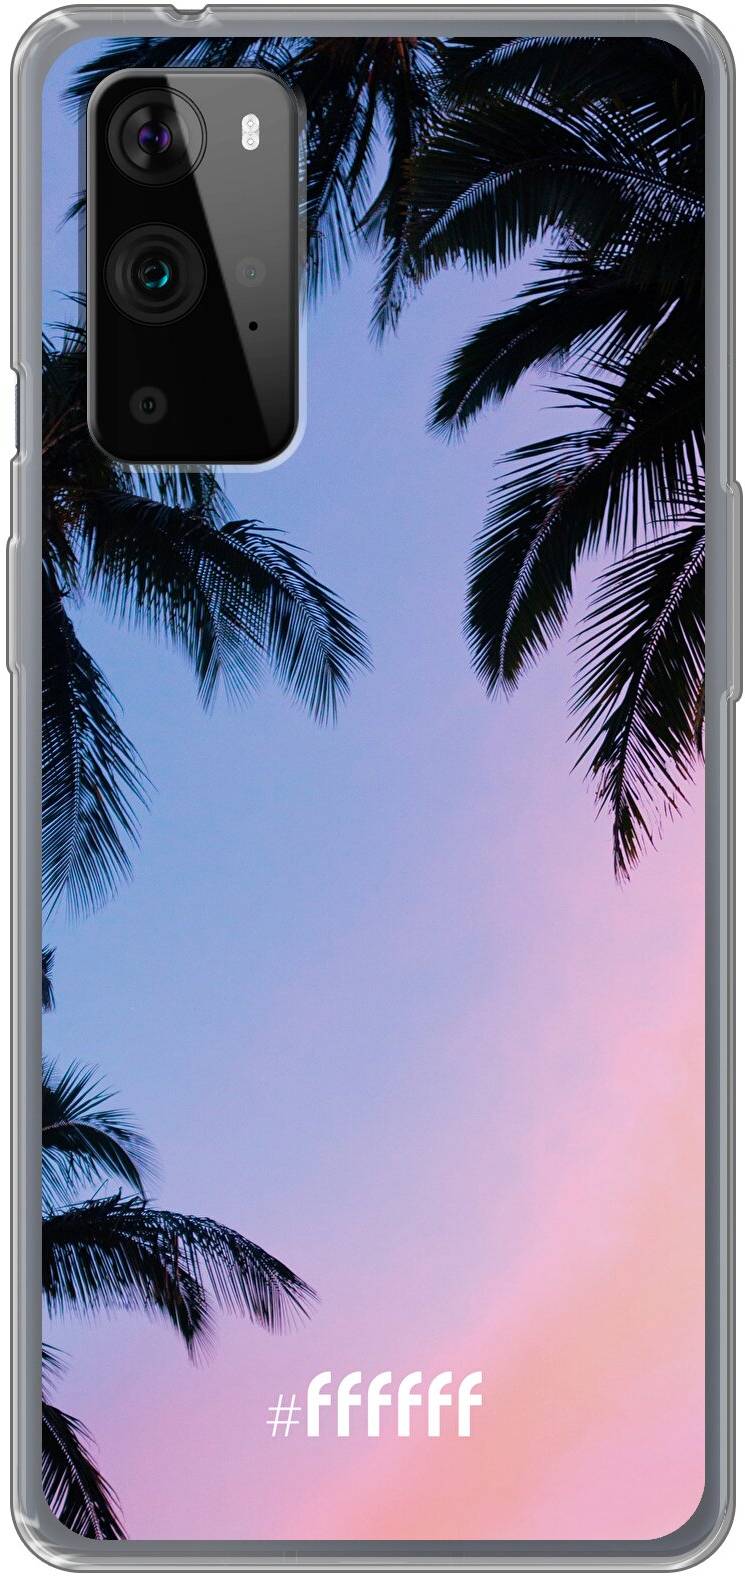 Sunset Palms 9 Pro